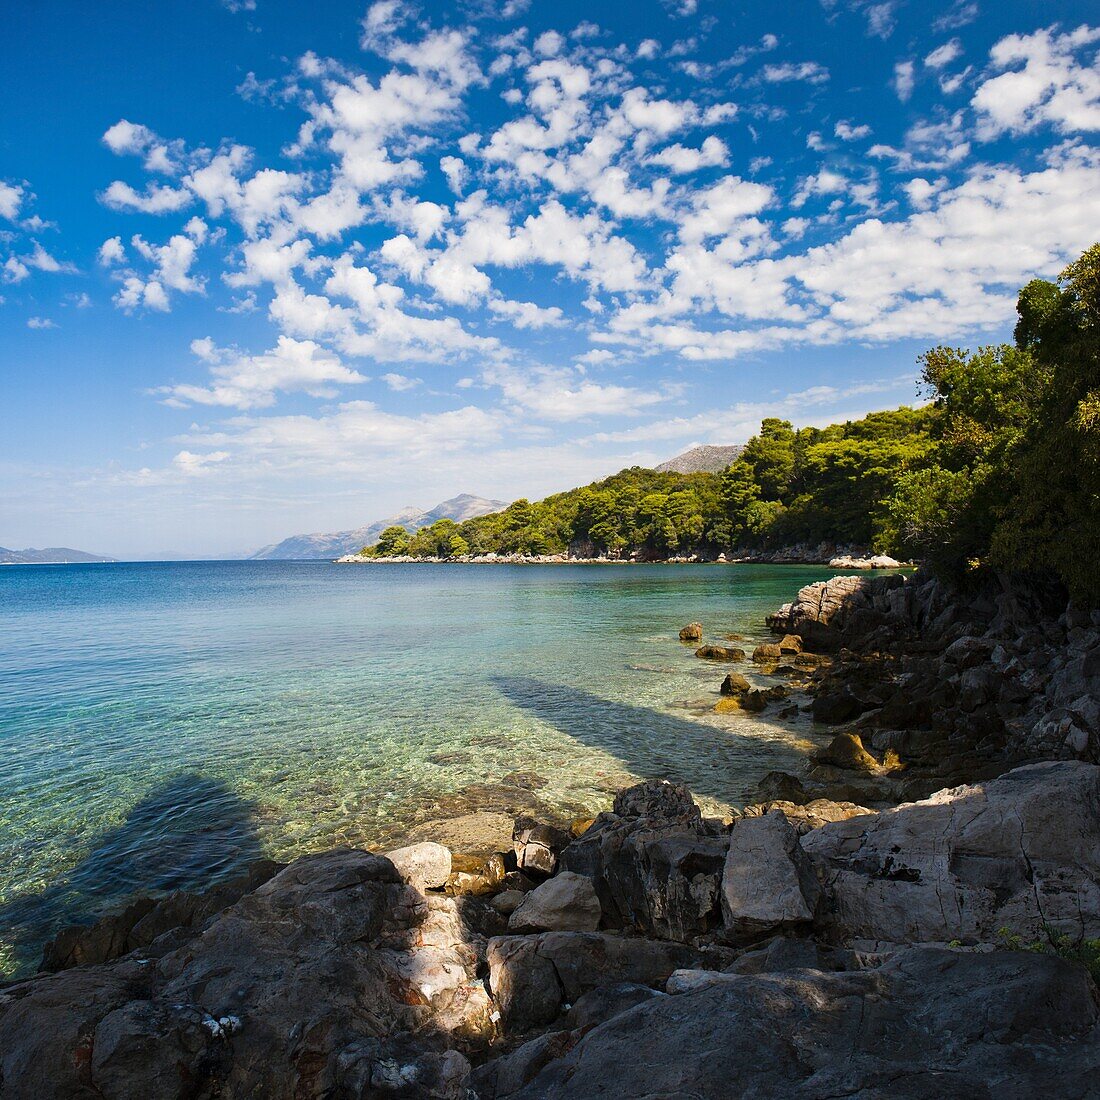 Kolocep Island (Kalamota), Elaphiti Islands (Elaphites), Dalmatian Coast, Adriatic Sea, Croatia, Europe